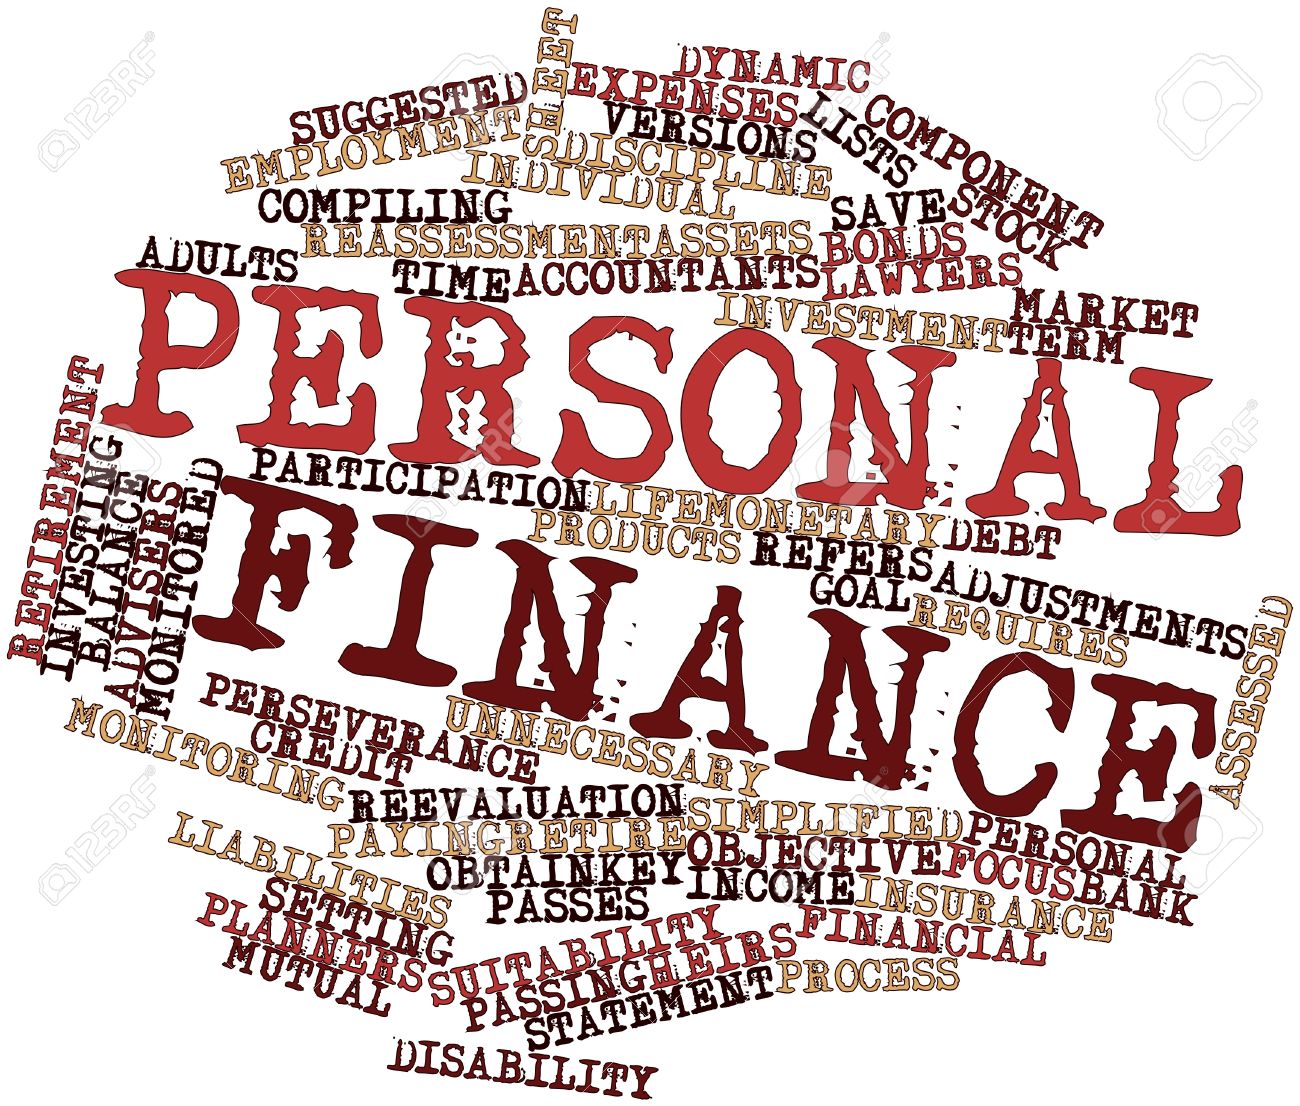 finance clipart personal finance